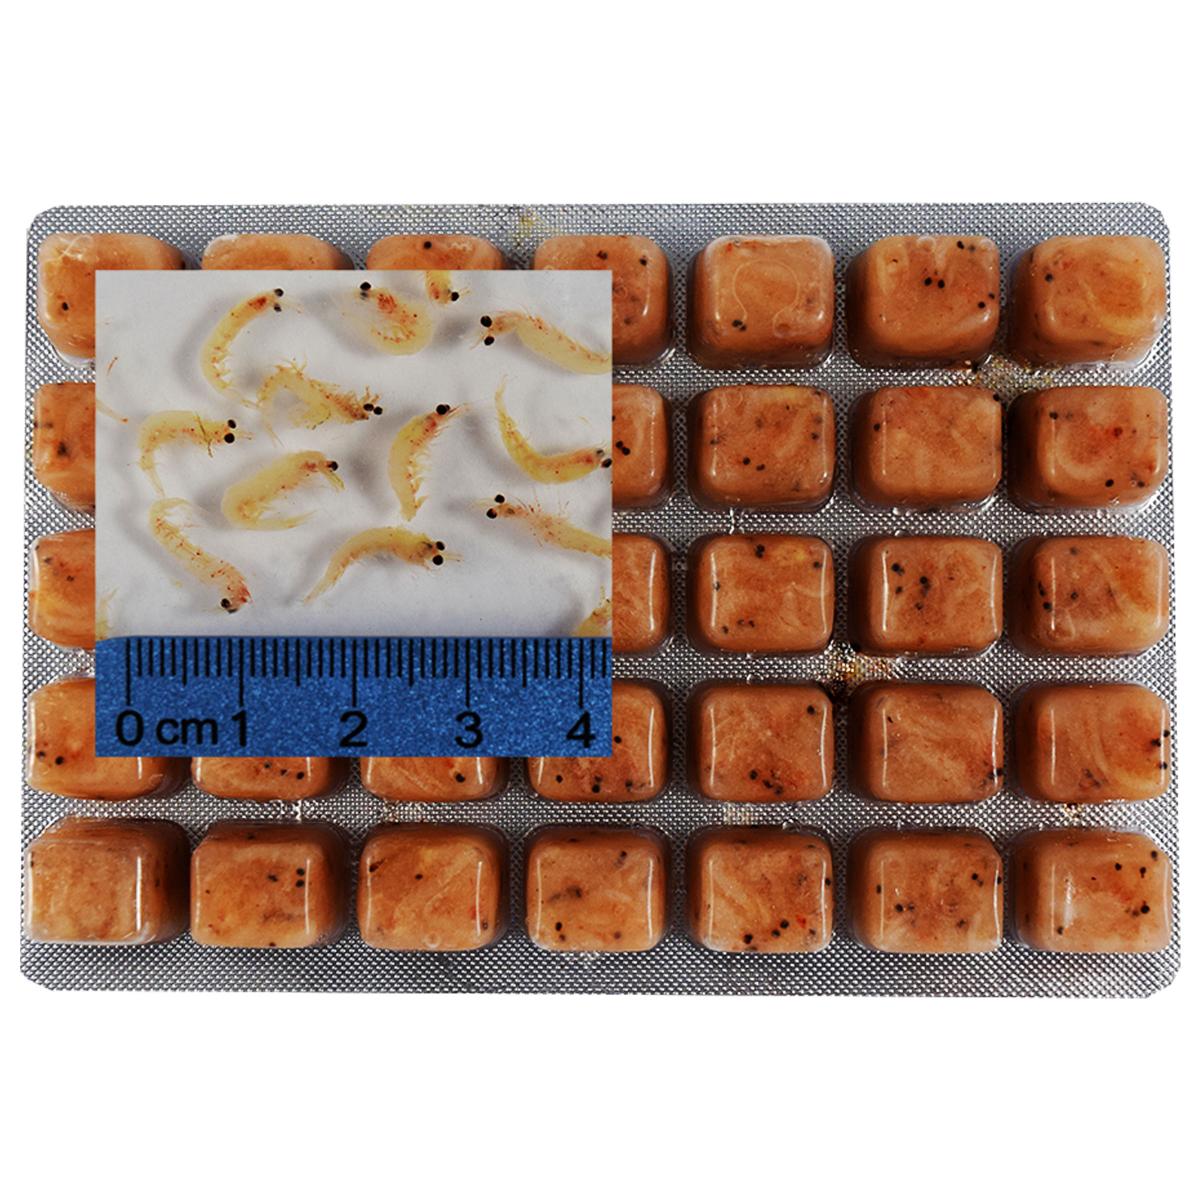 Frozen Krill Pacifica cube trays, 7 x 3.5 oz. cube trays, 1 box